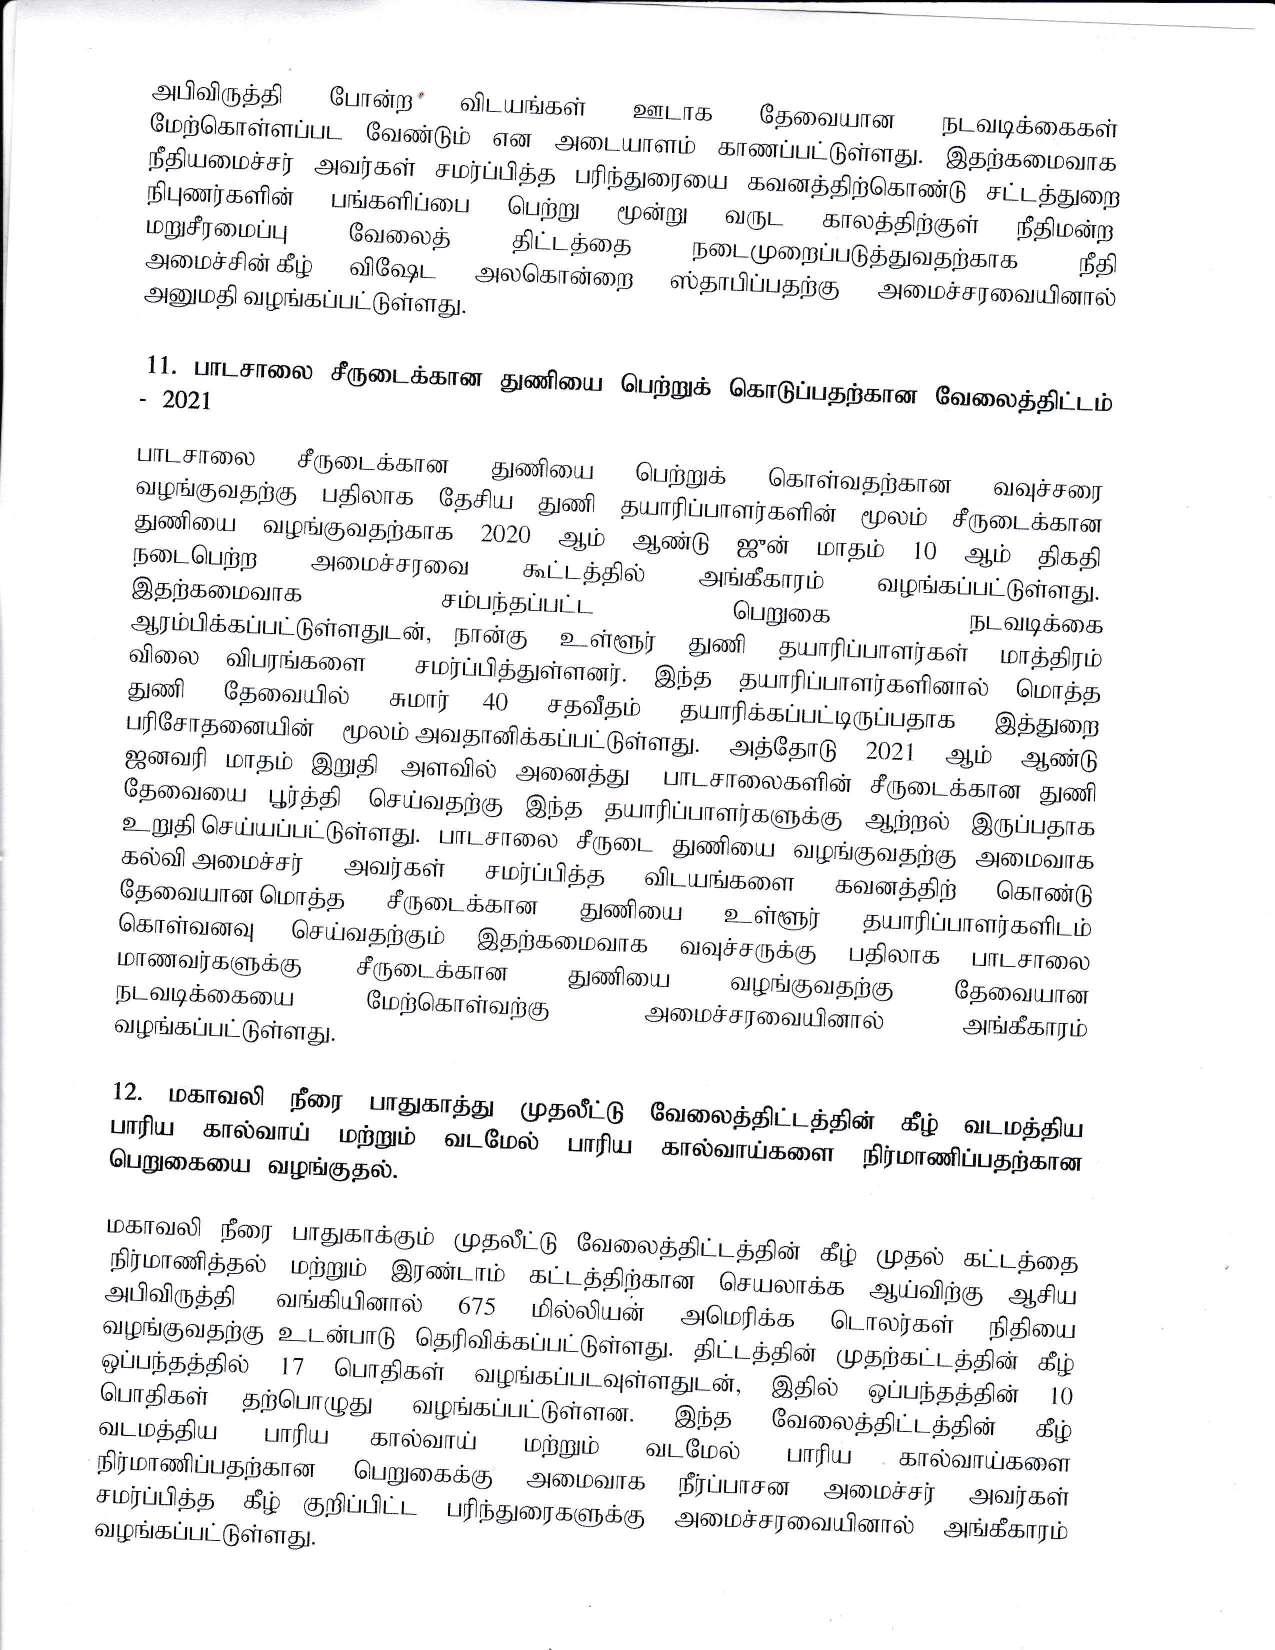 cabinet Desicion on 28.09.2020 Tamil 1 page 007